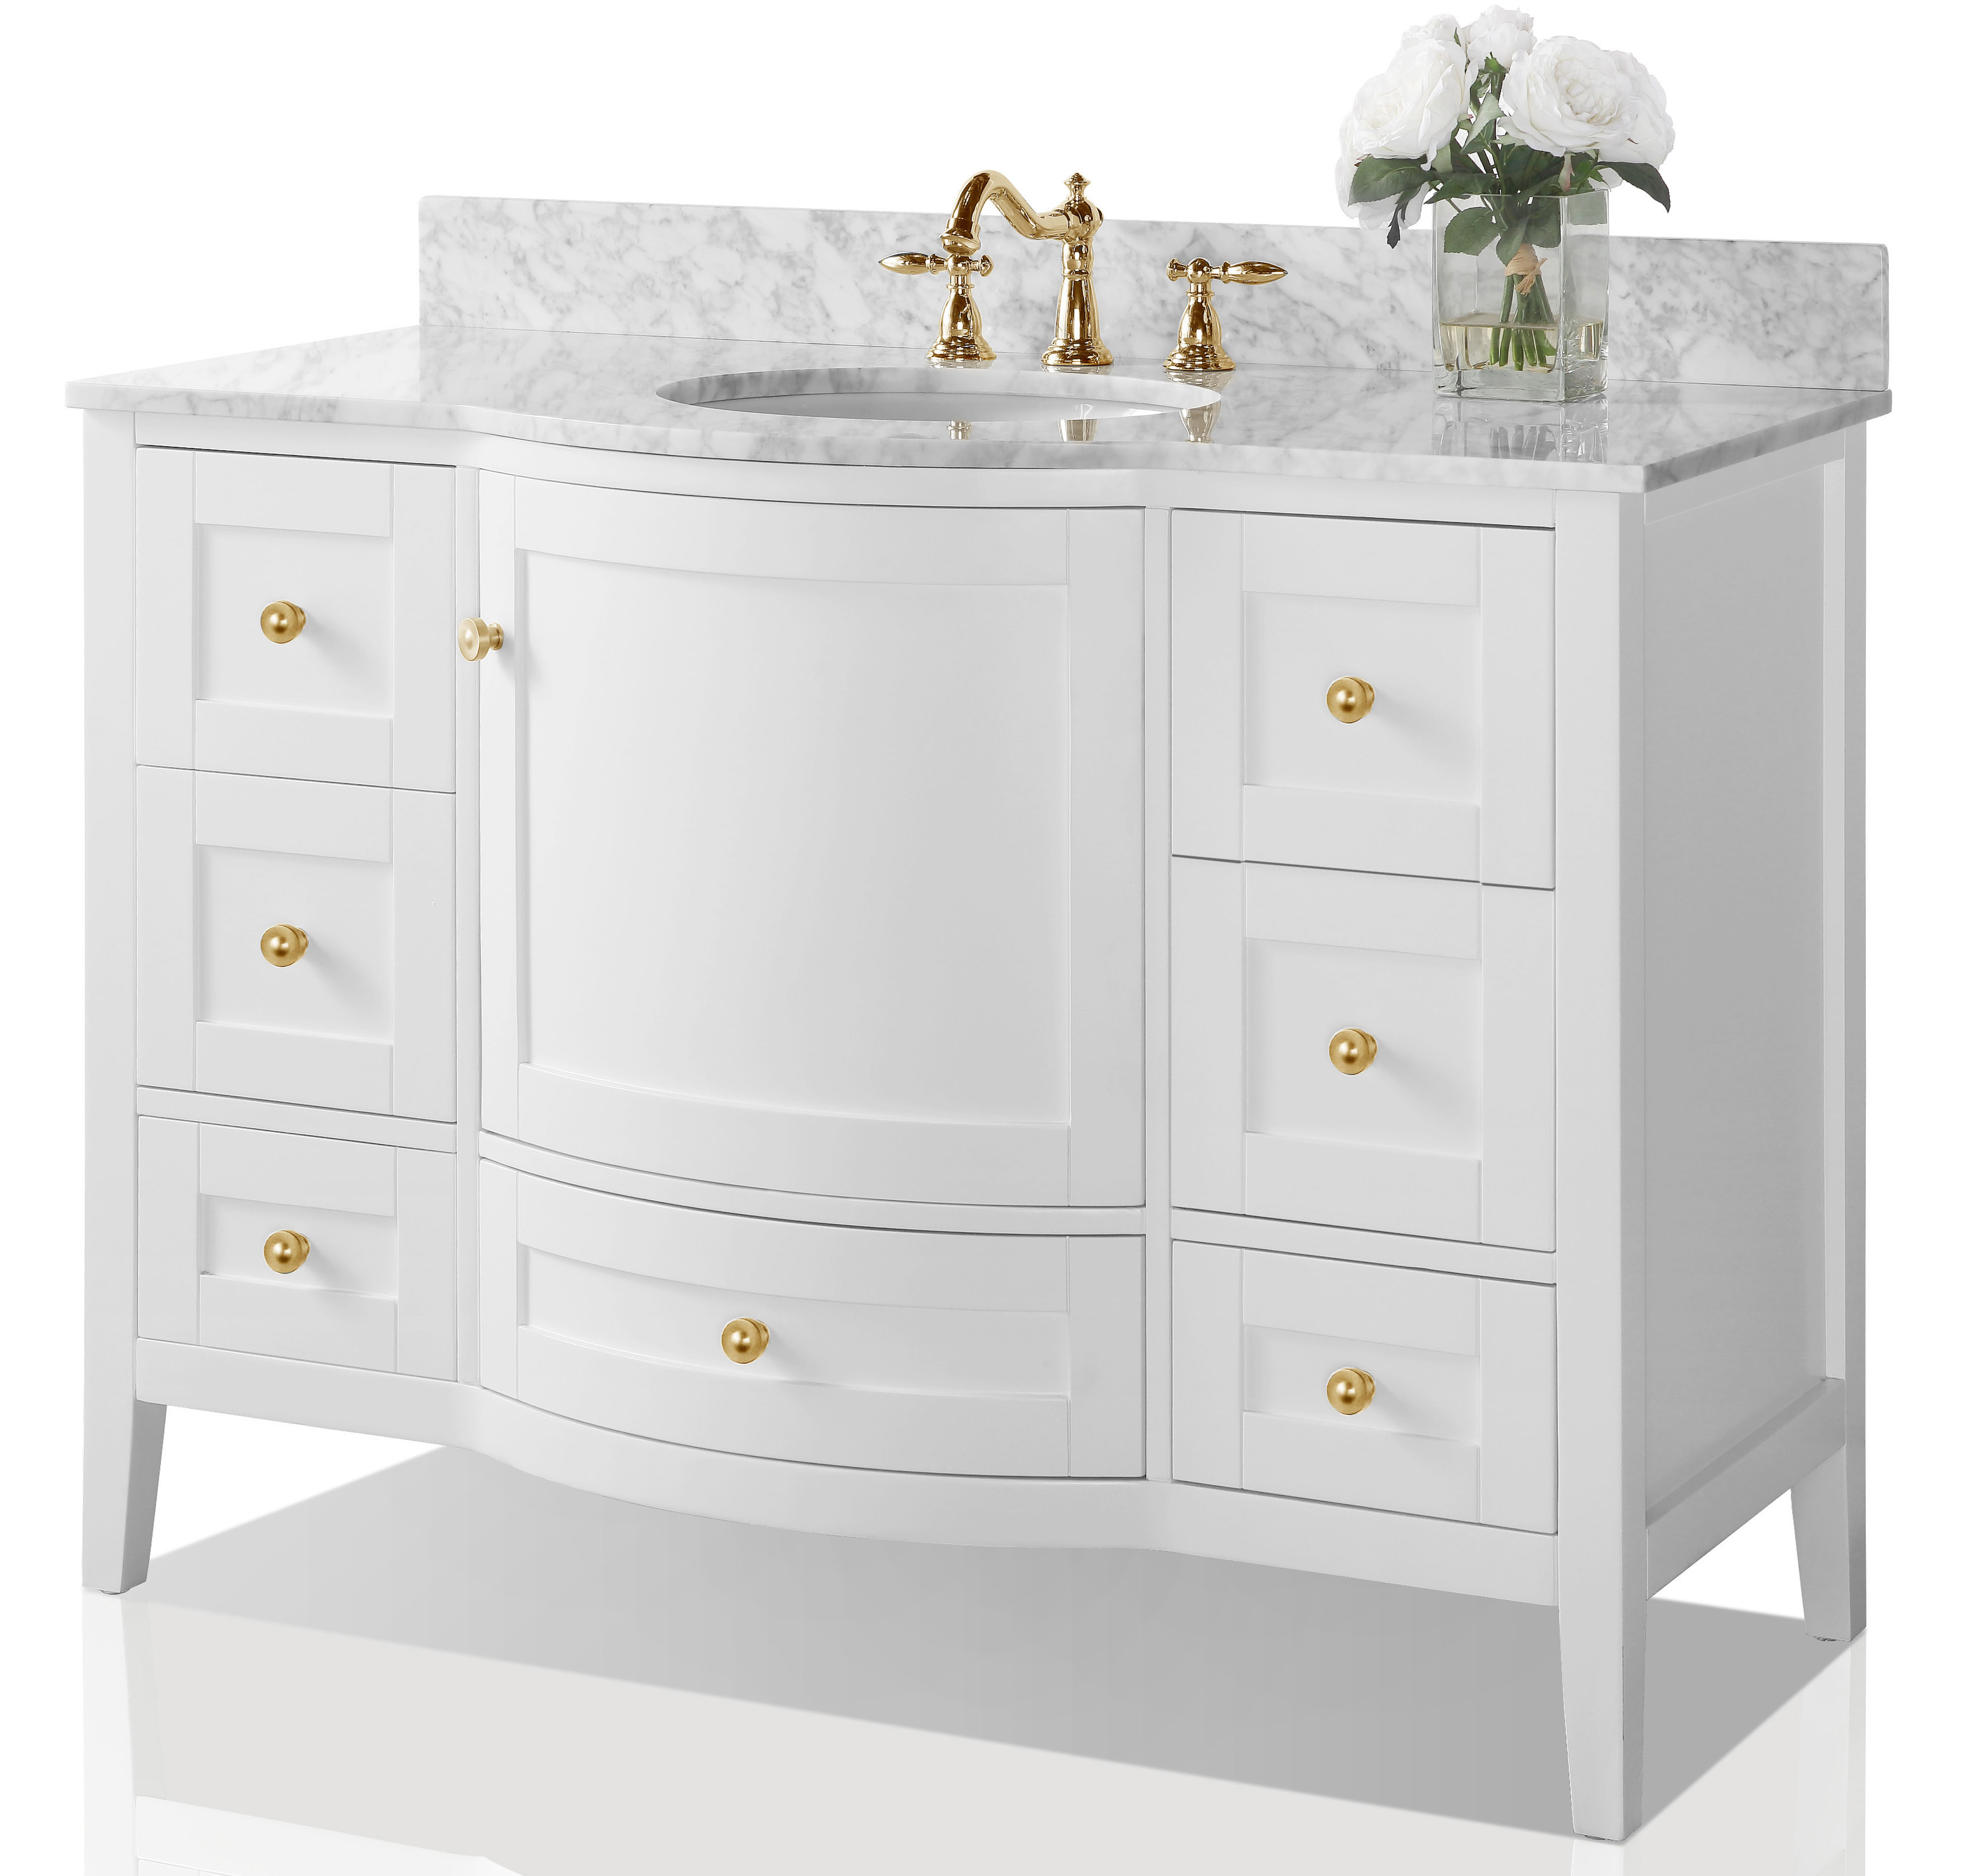 48" Single Sink Bath Vanity Set in White with Italian Carrara White Marble Vanity Top and White Undermount Basin